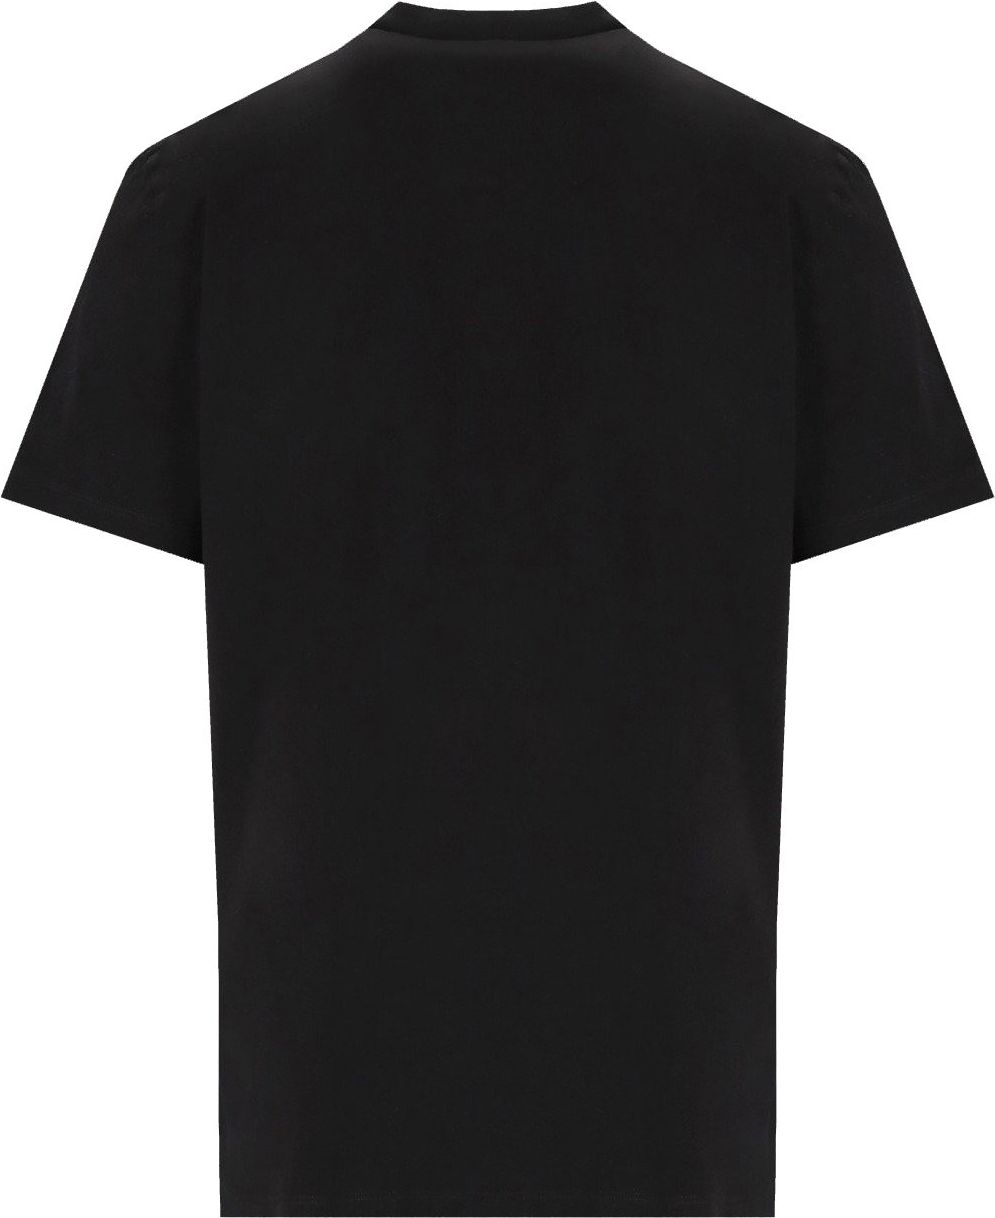 Dsquared2 Cool Fit Enfant Terribles Black T-shirt Black Zwart